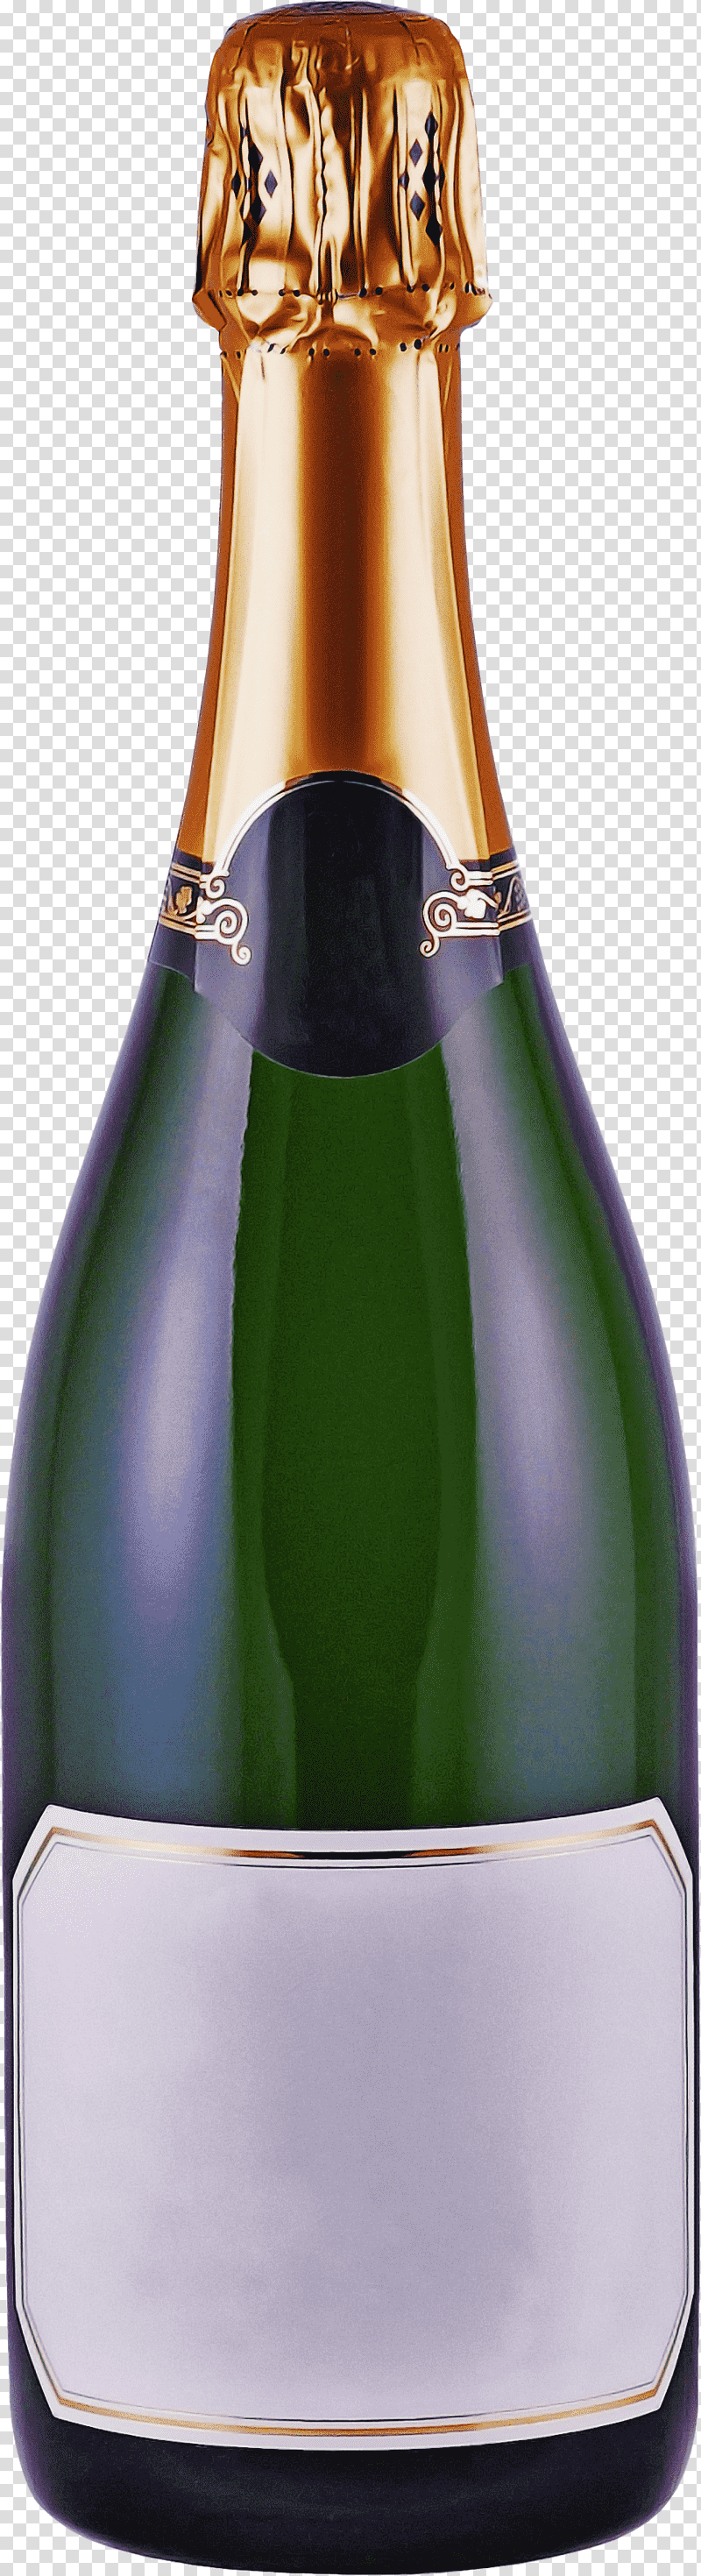 Champagne, Sparkling Wine, Glass Bottle, Wine Bottle, Barware transparent background PNG clipart